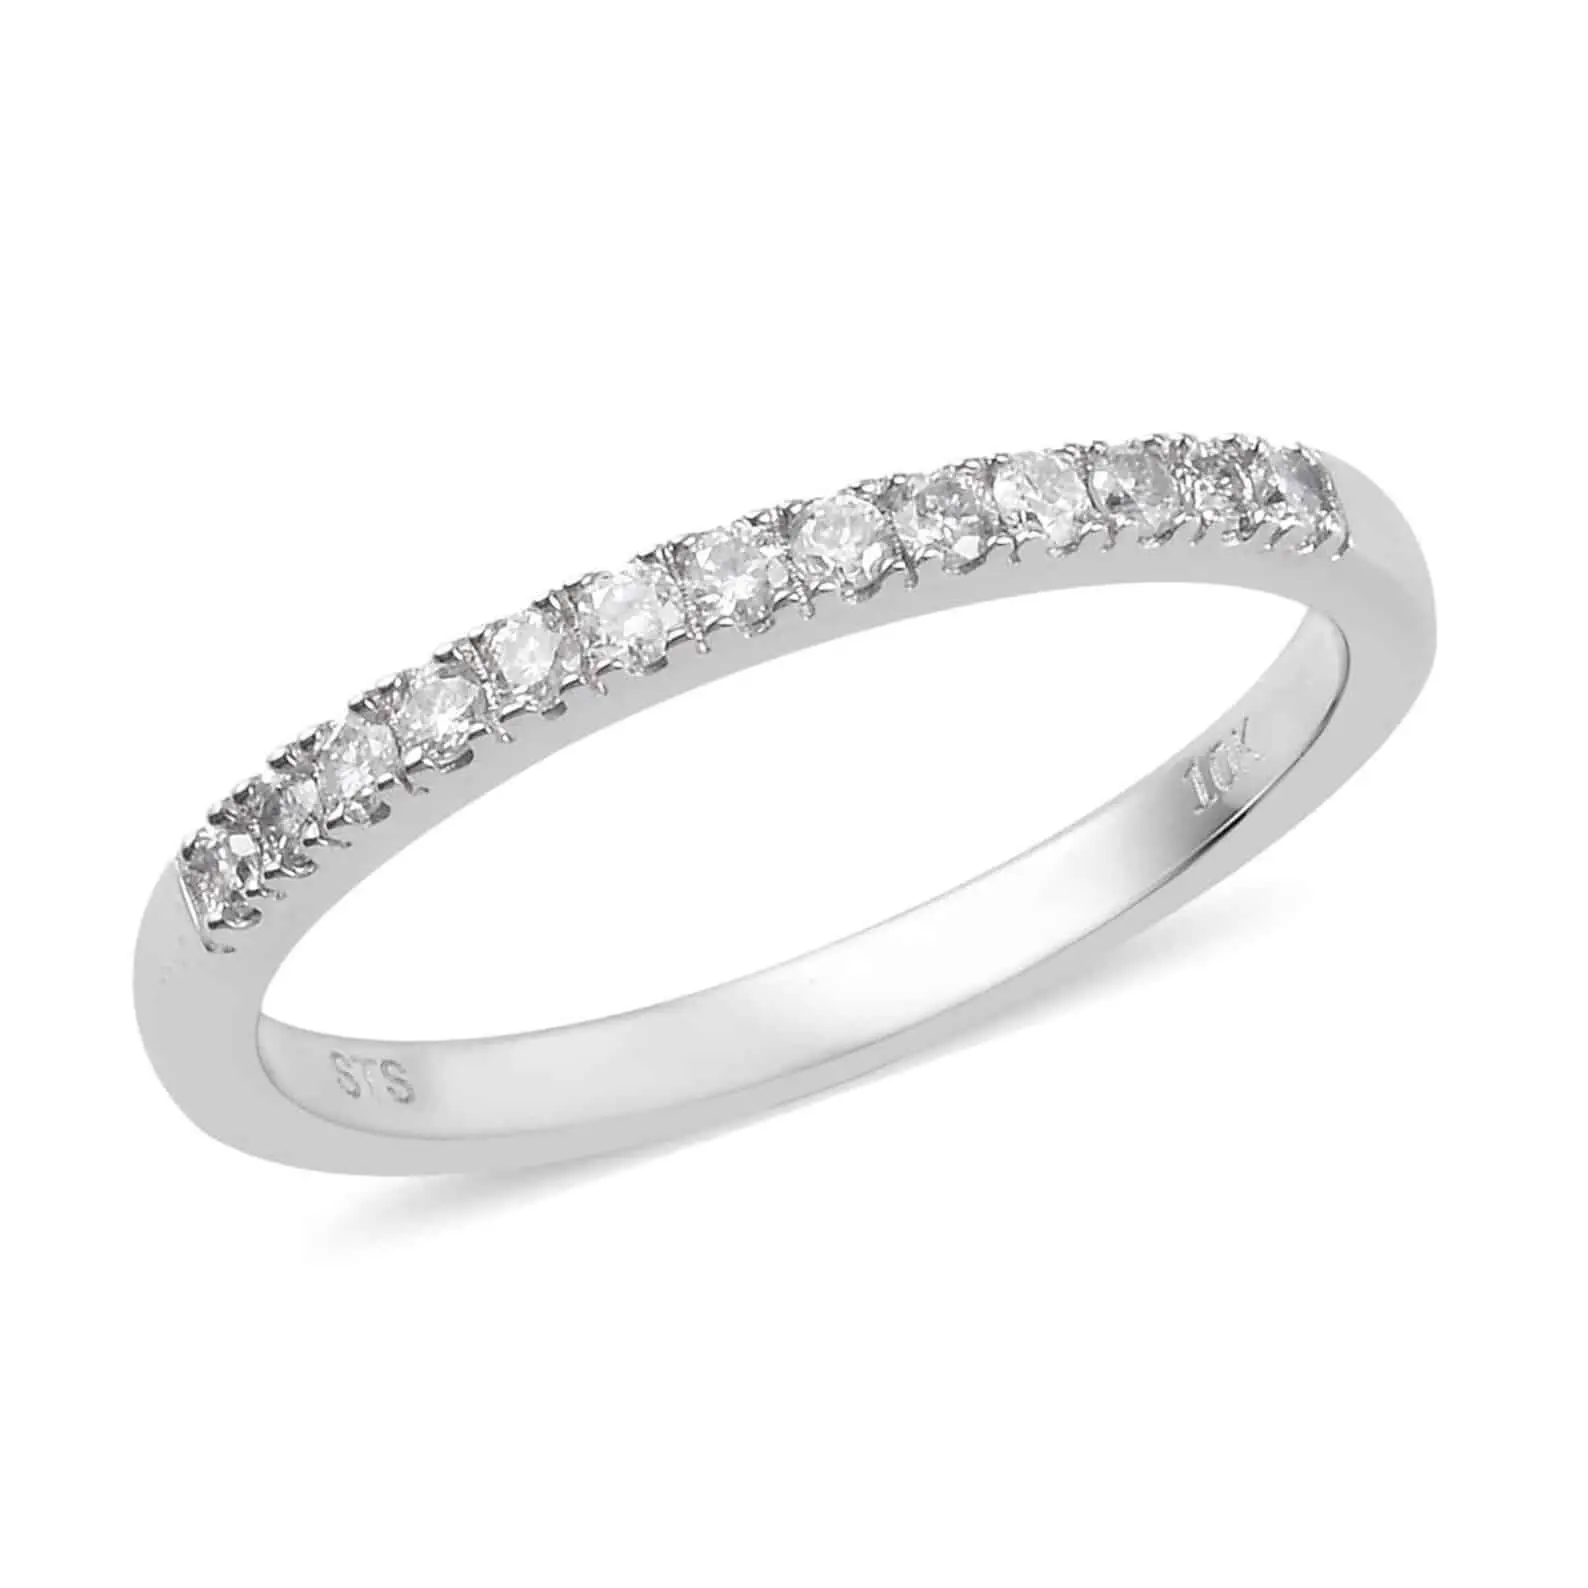 0.25 ctw Diamond Ring in 10K White Gold Size 7.0 2.10 Grams